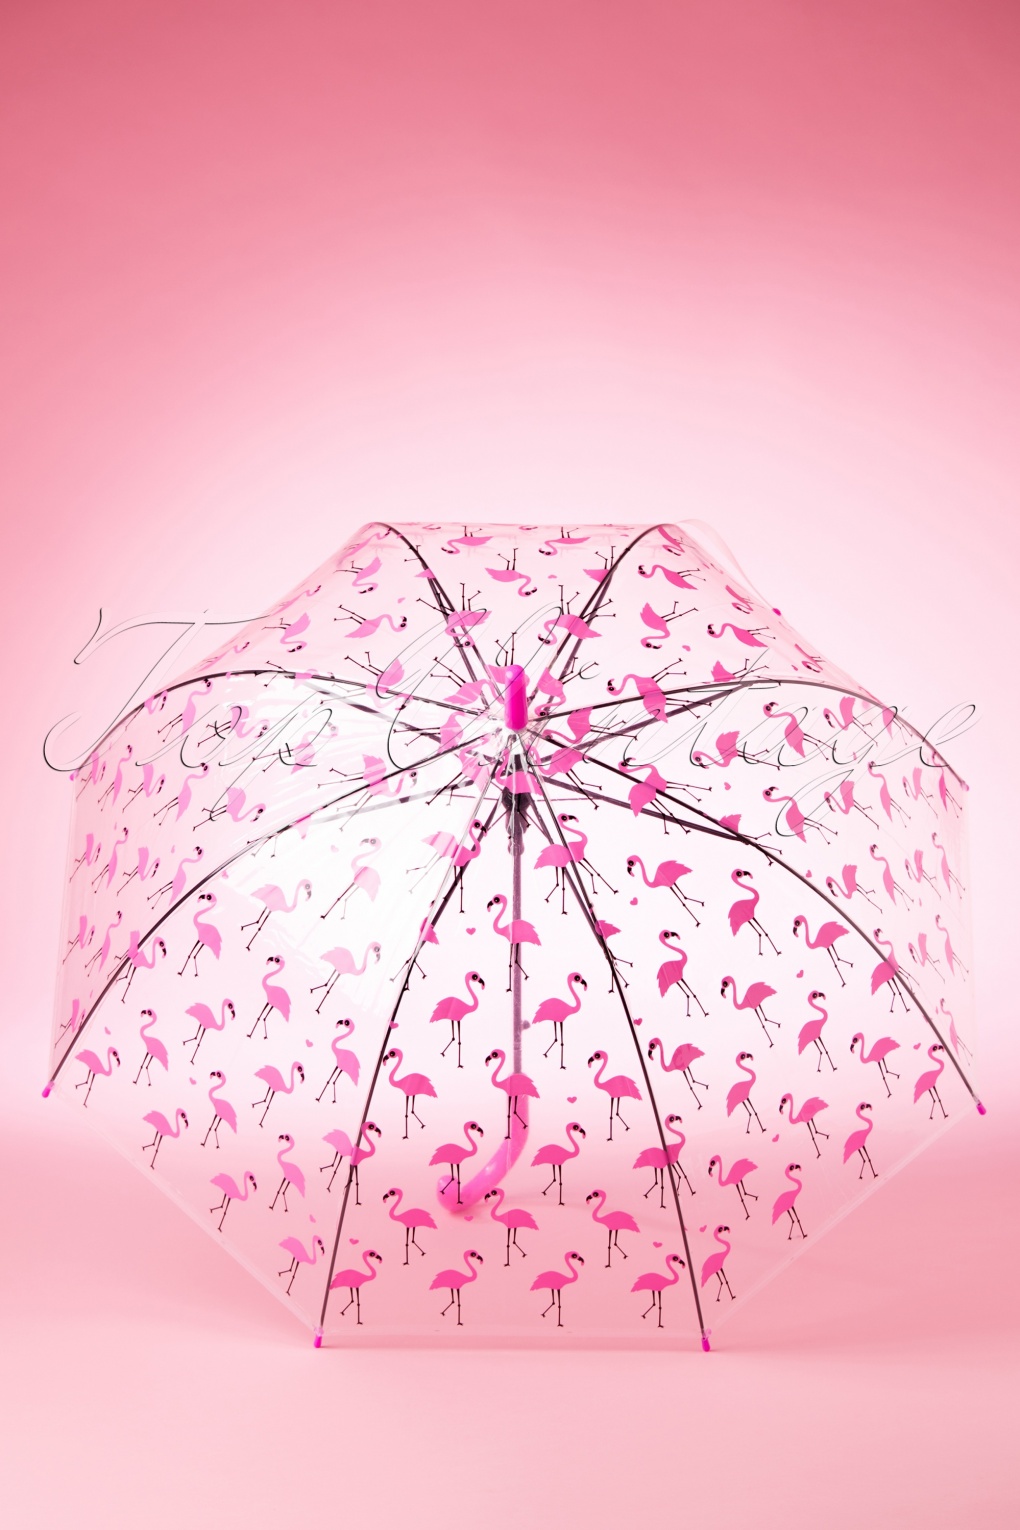 hidden umbrella in flamingo pictures